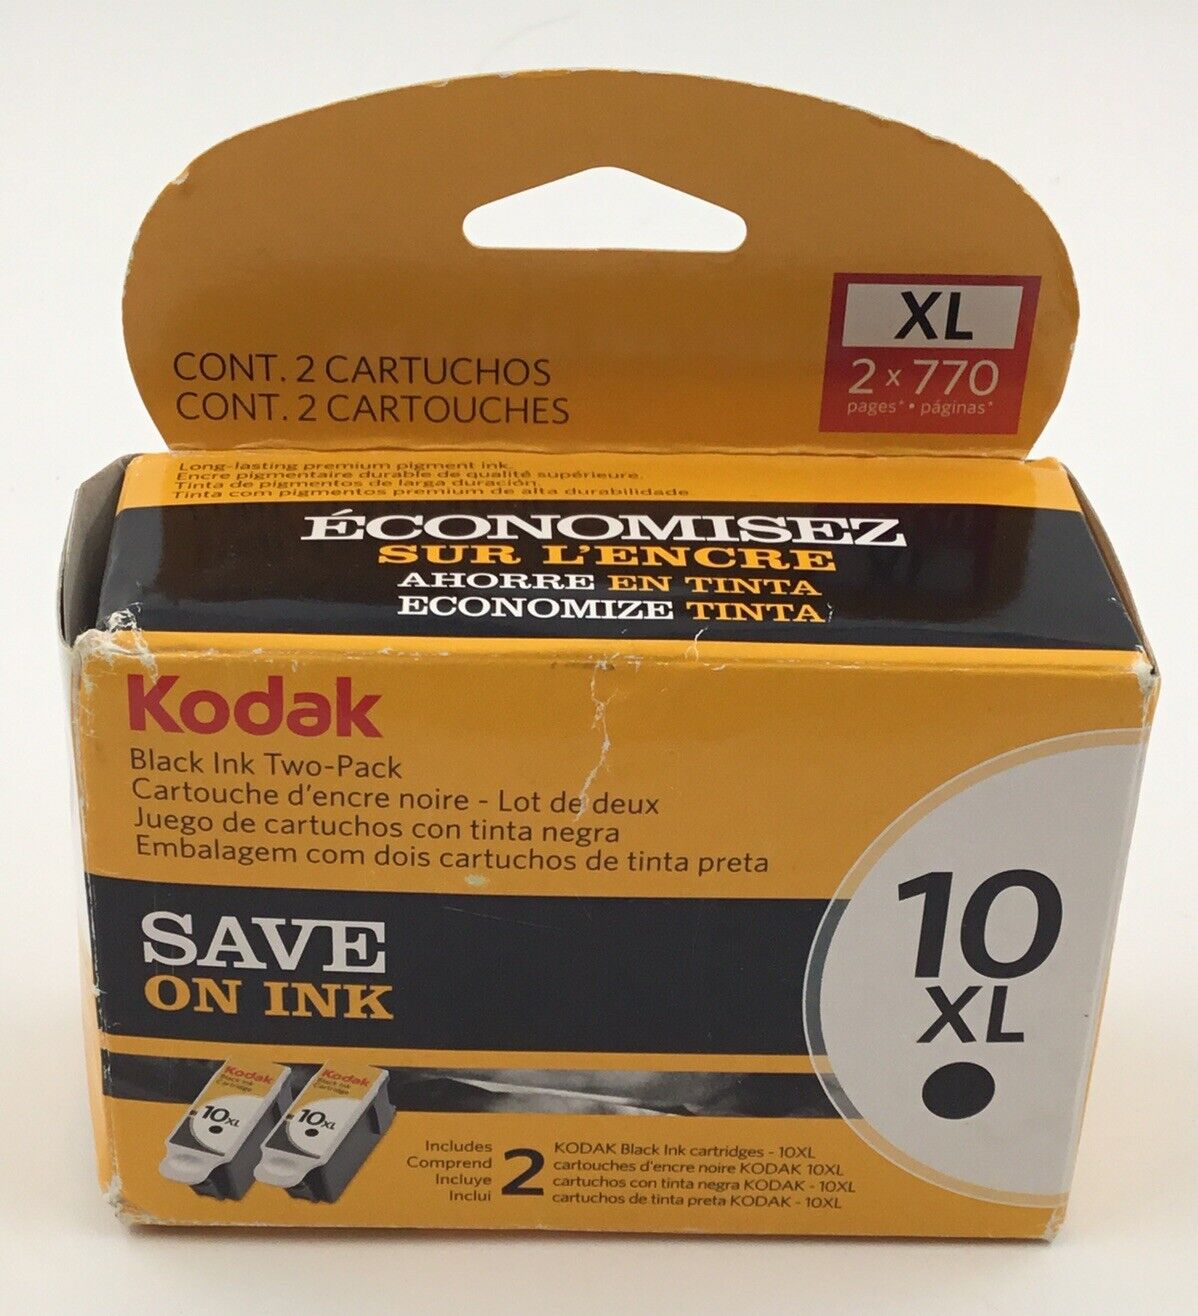 Kodak Black Ink Ink Two- Pack 10XL New In Box